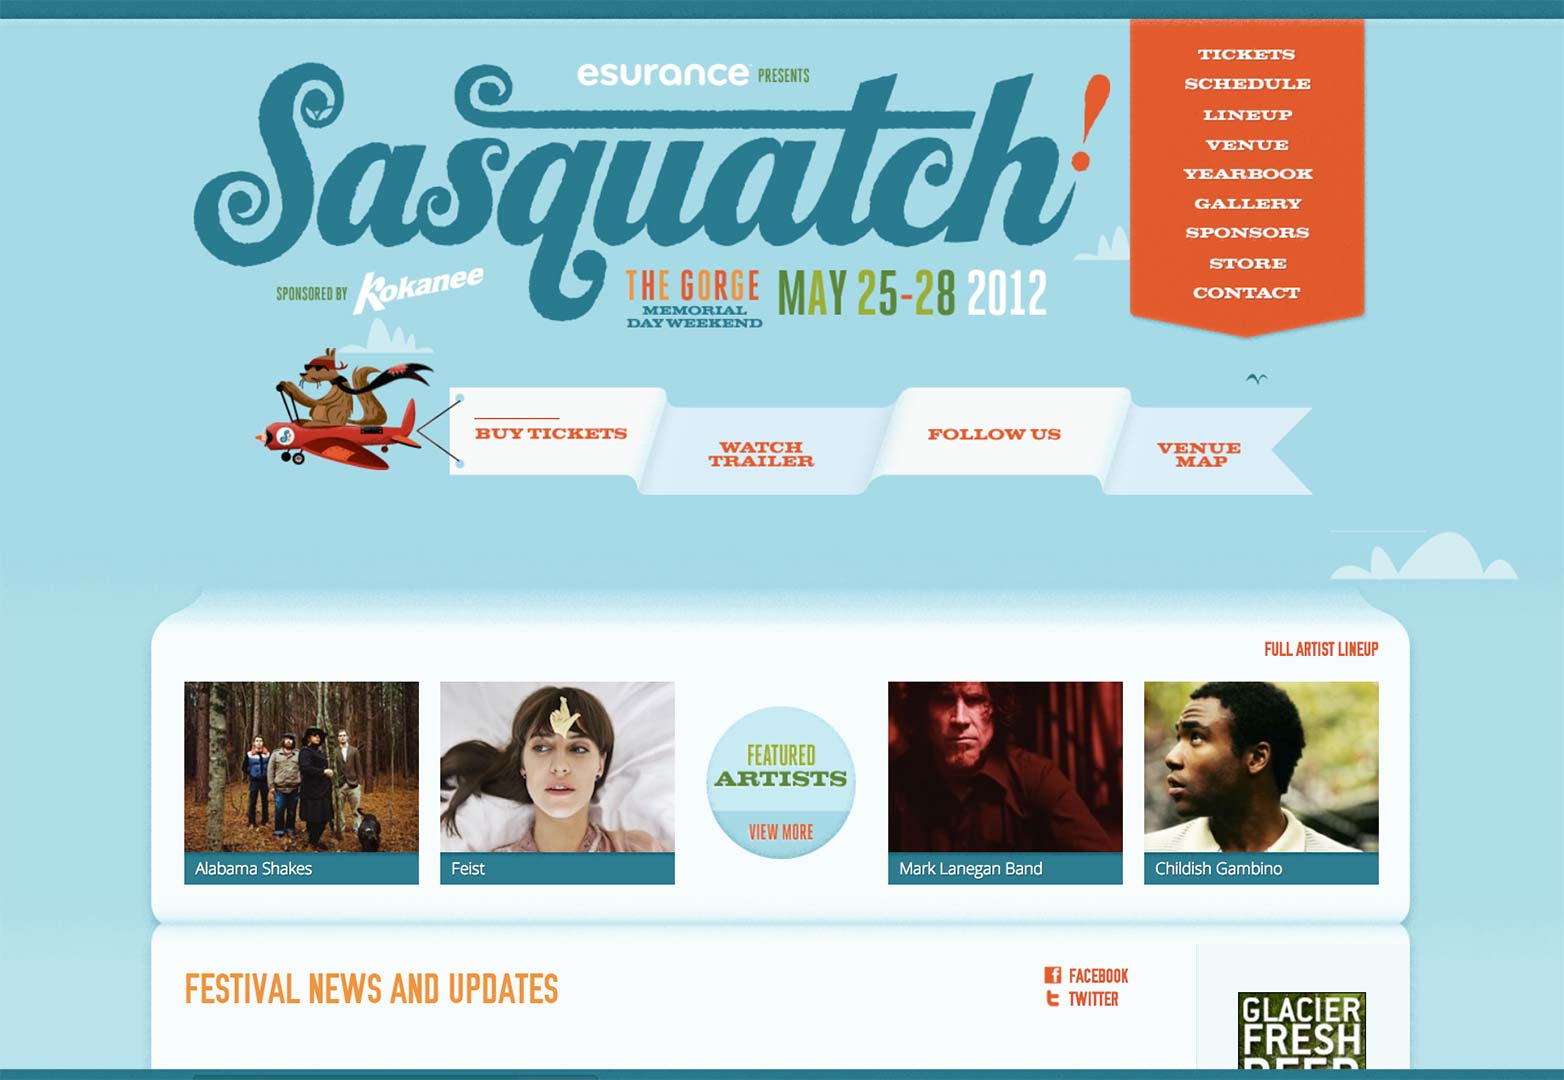 Sasquatch Festival